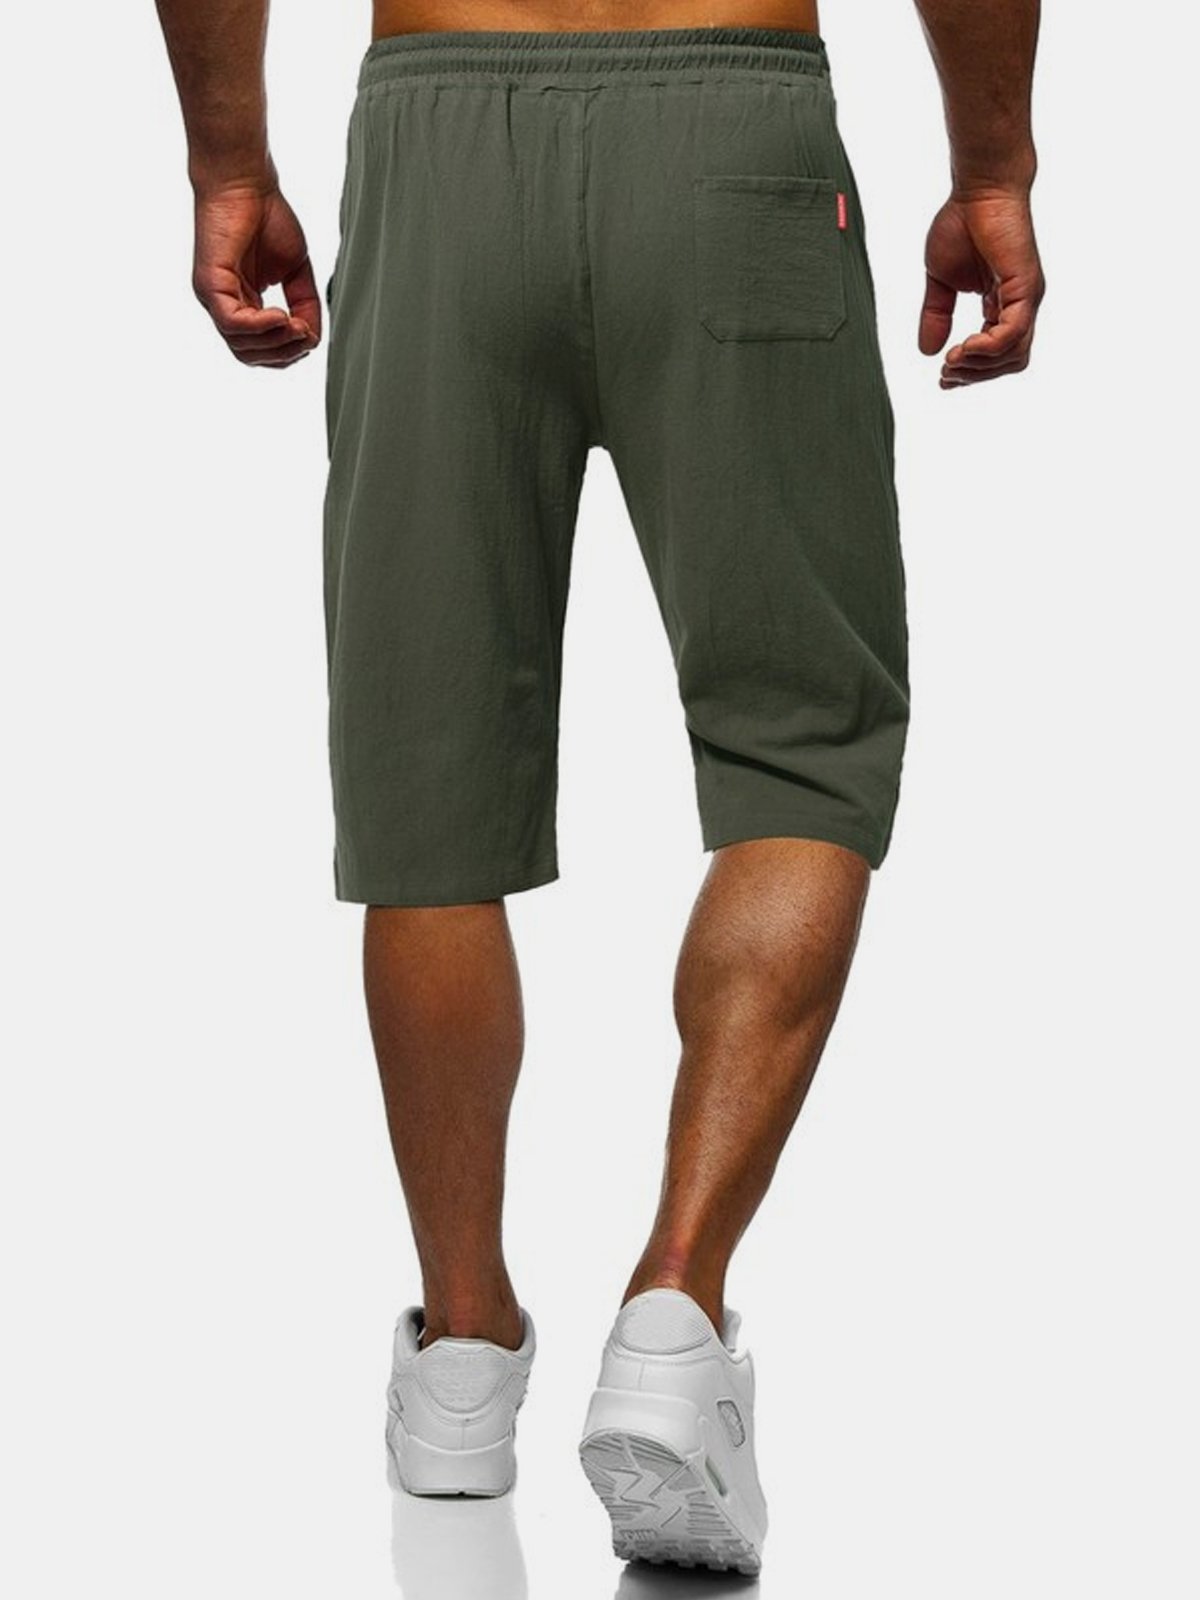 Natural Fiber Men's Beach Pants Breathable Shorts Casual Middle Pants